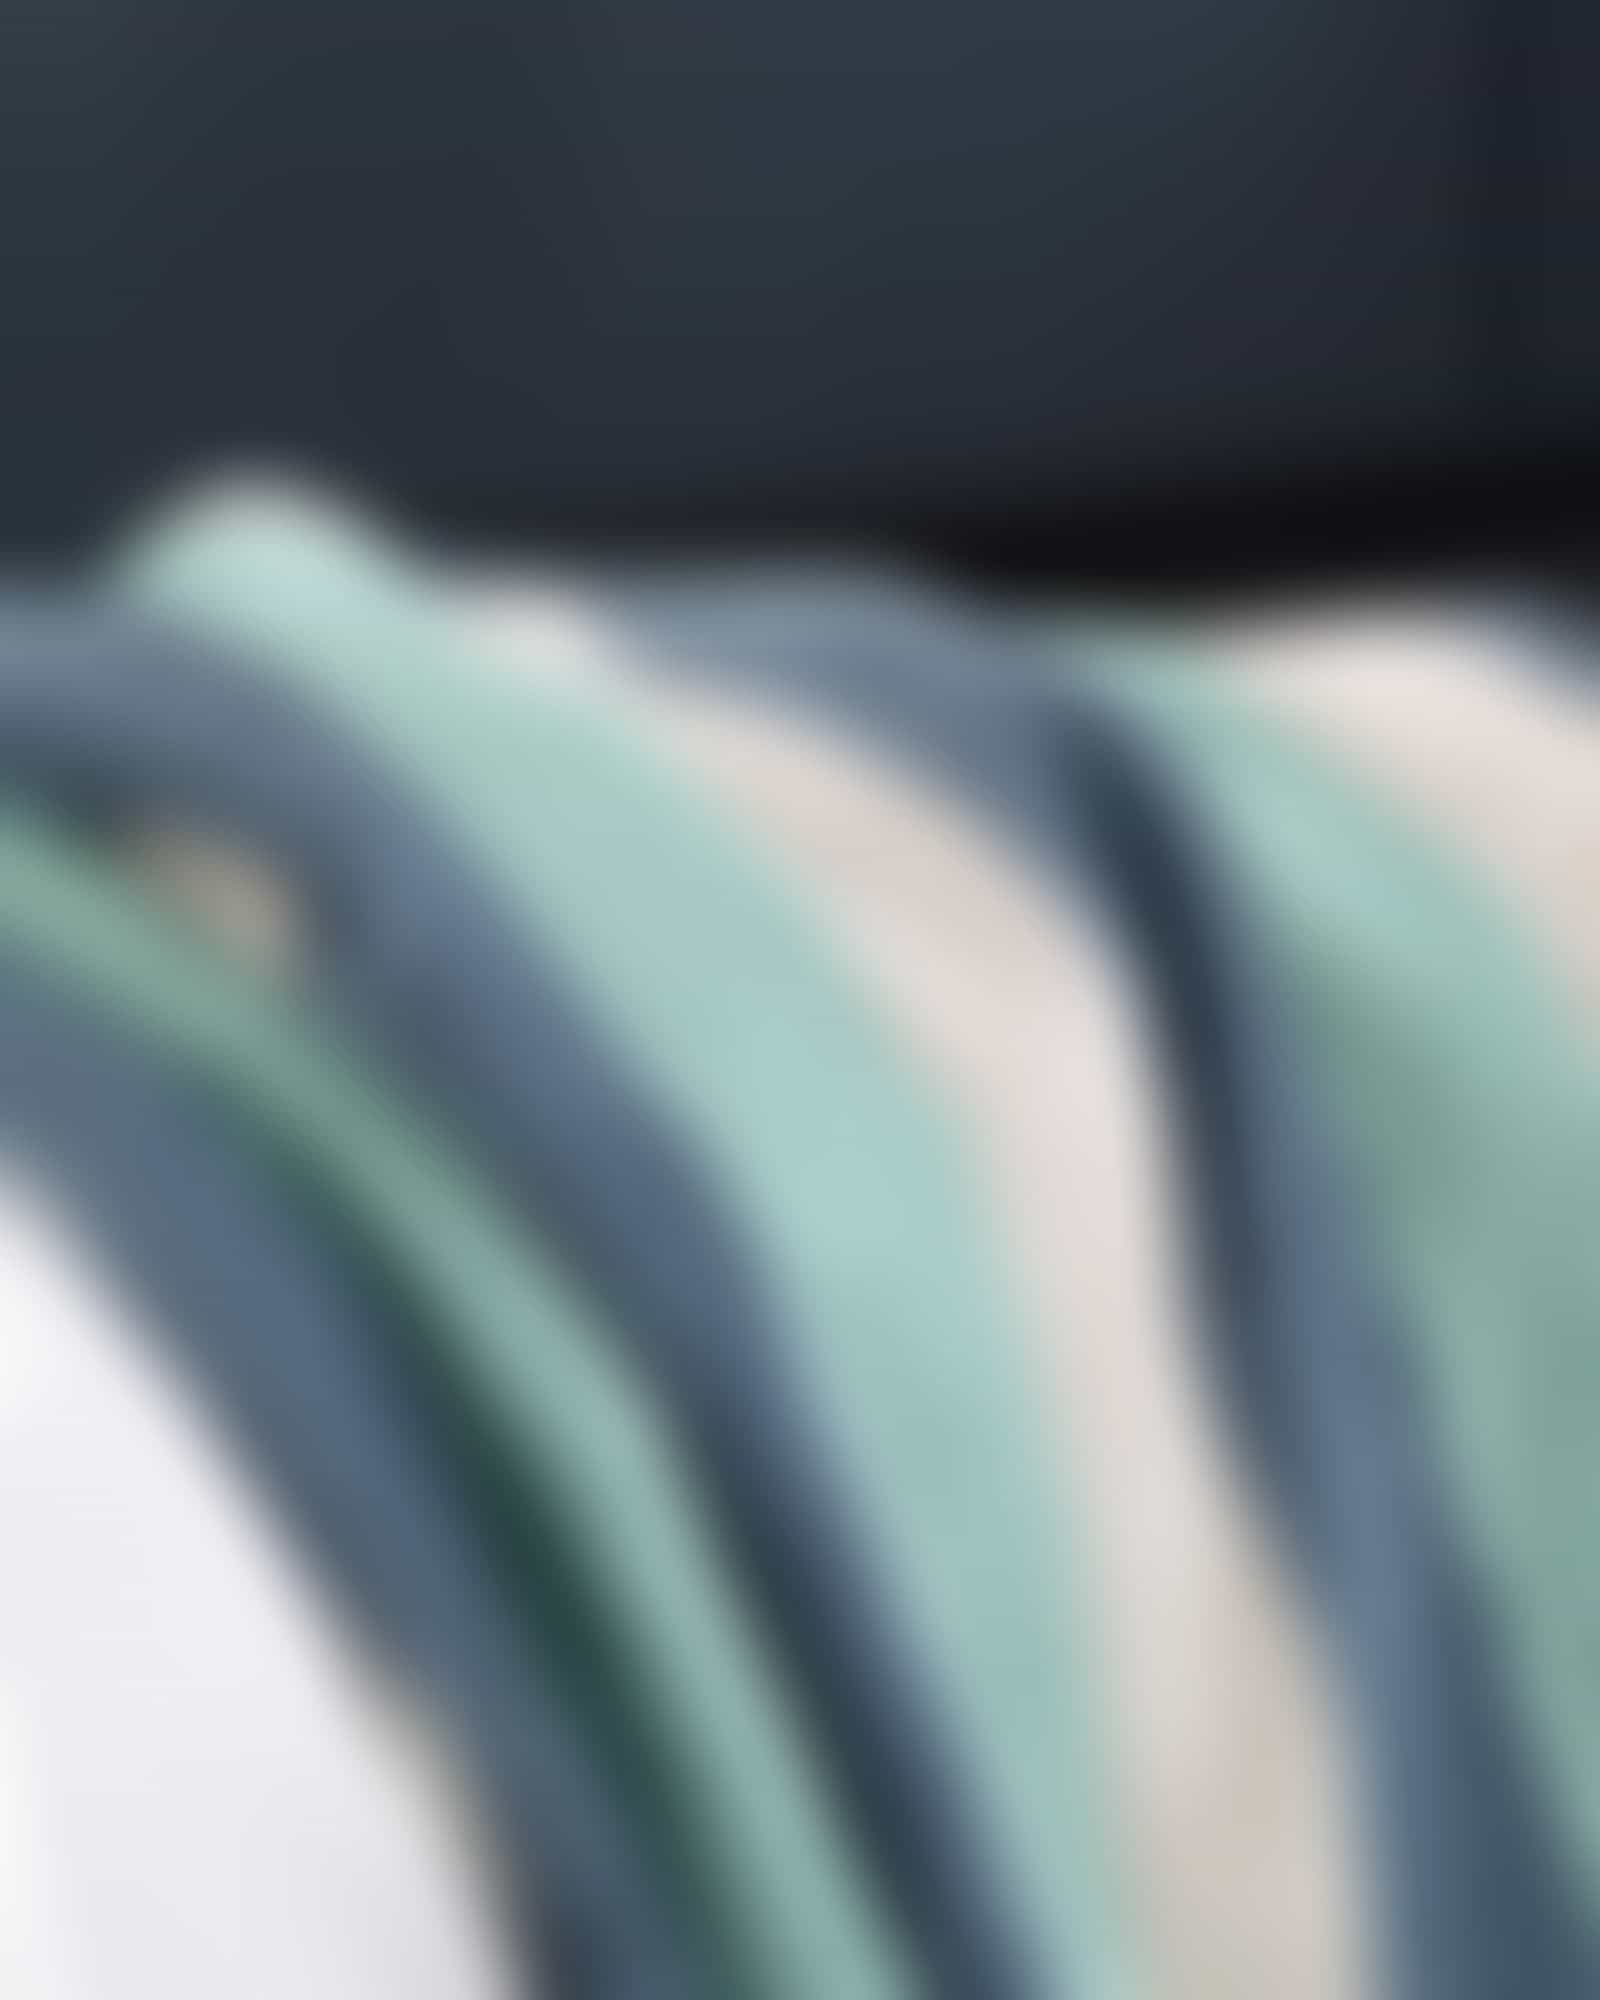 Cawö Handtücher Sense Blockstreifen 6205 - Farbe: nachtblau - 31 - Duschtuch 70x140 cm